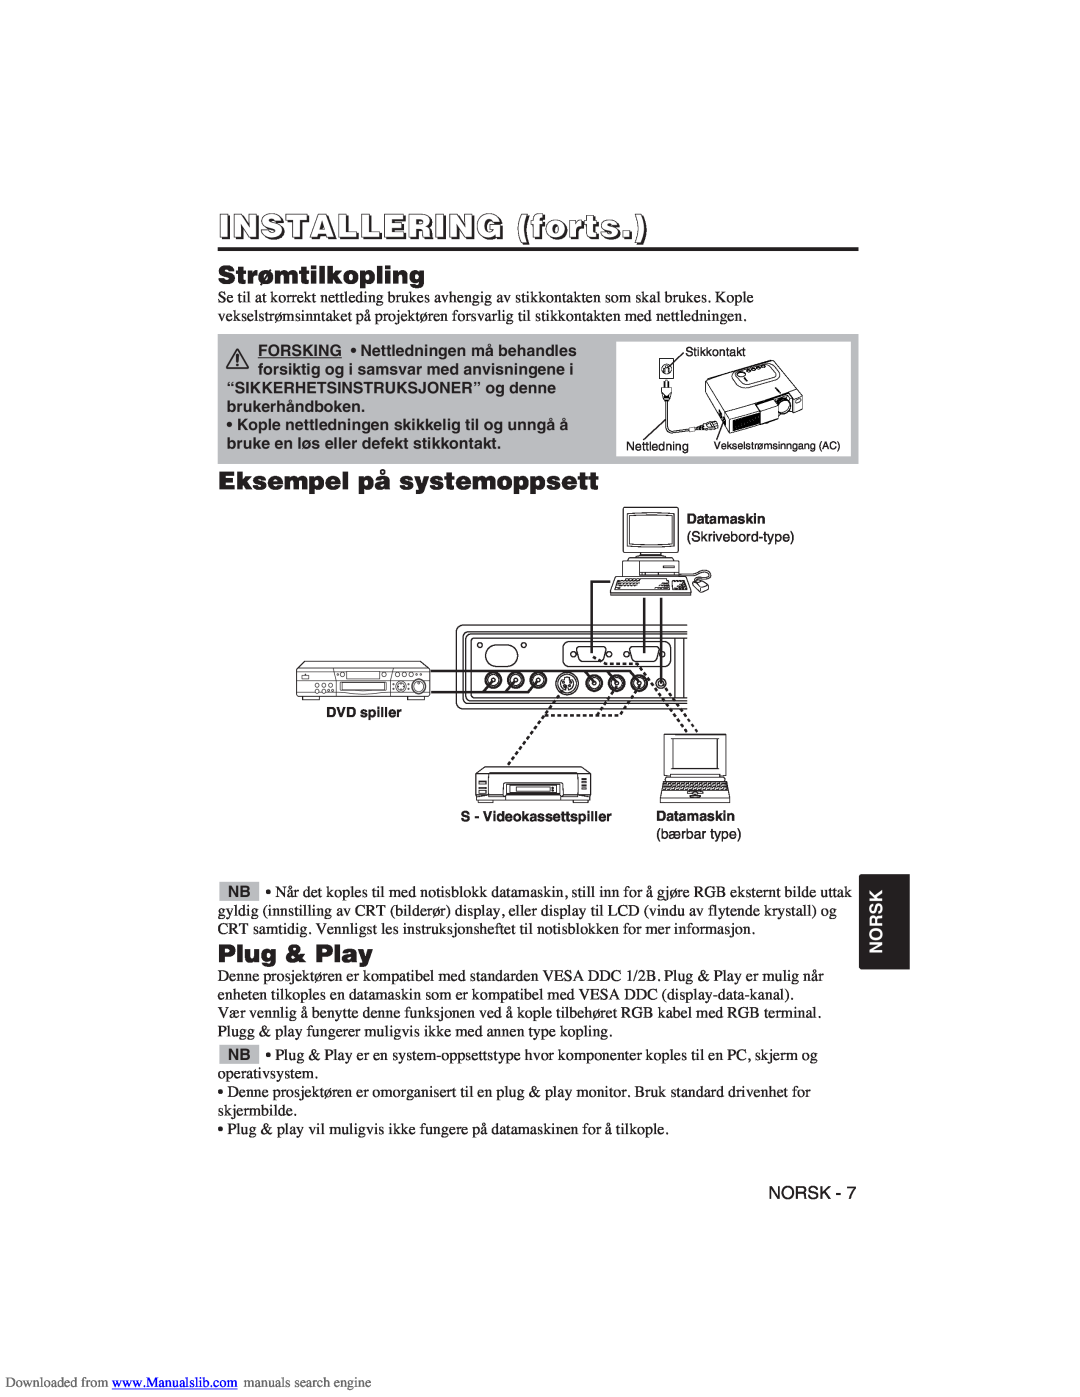 Hitachi CP-X275W user manual Strømtilkopling, Eksempel på systemoppsett, INSTALLERING forts, Plug & Play, Norsk 